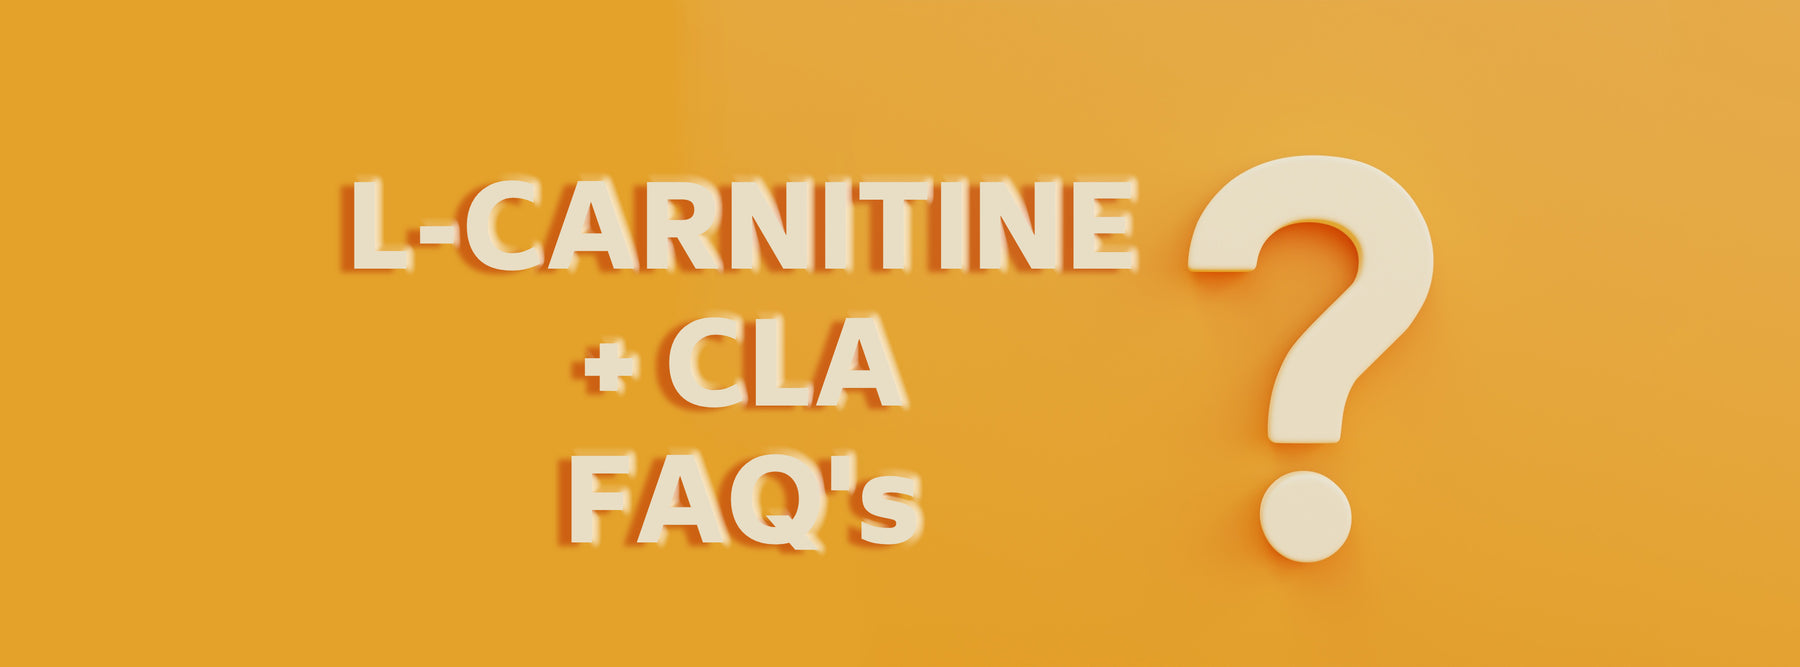 L-Carnitine & CLA FAQs